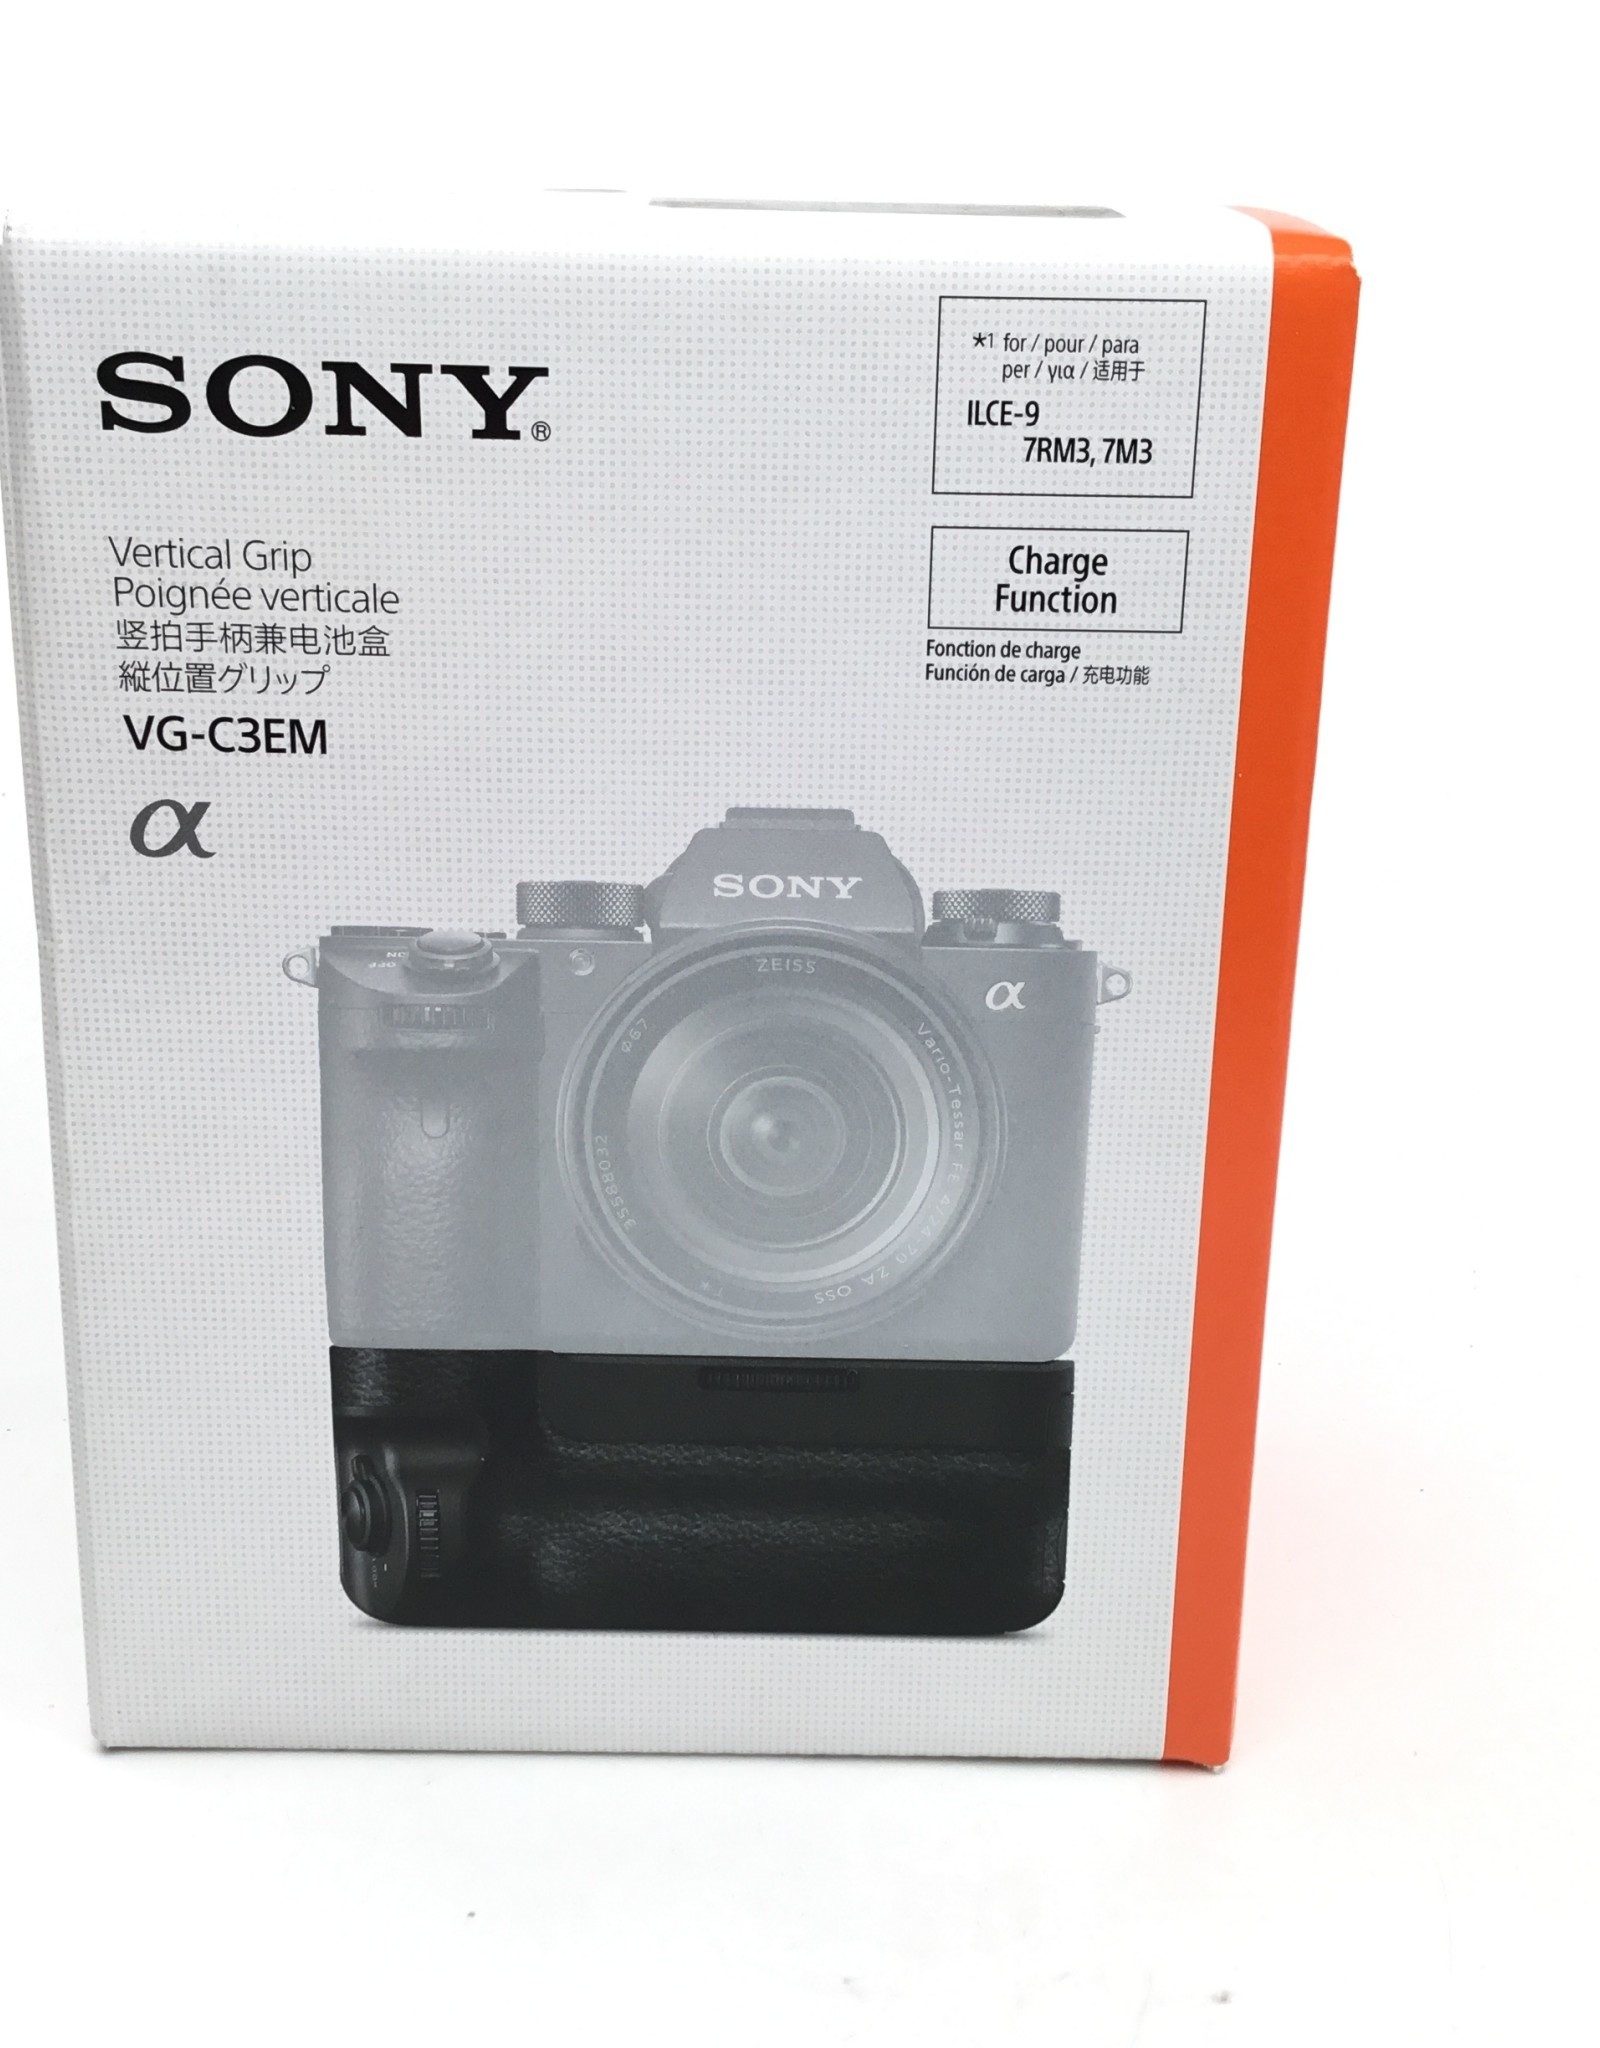 SONY Sony VG-C3EM Vertical Grip for A9, A7R III, A7III in Box Used LN